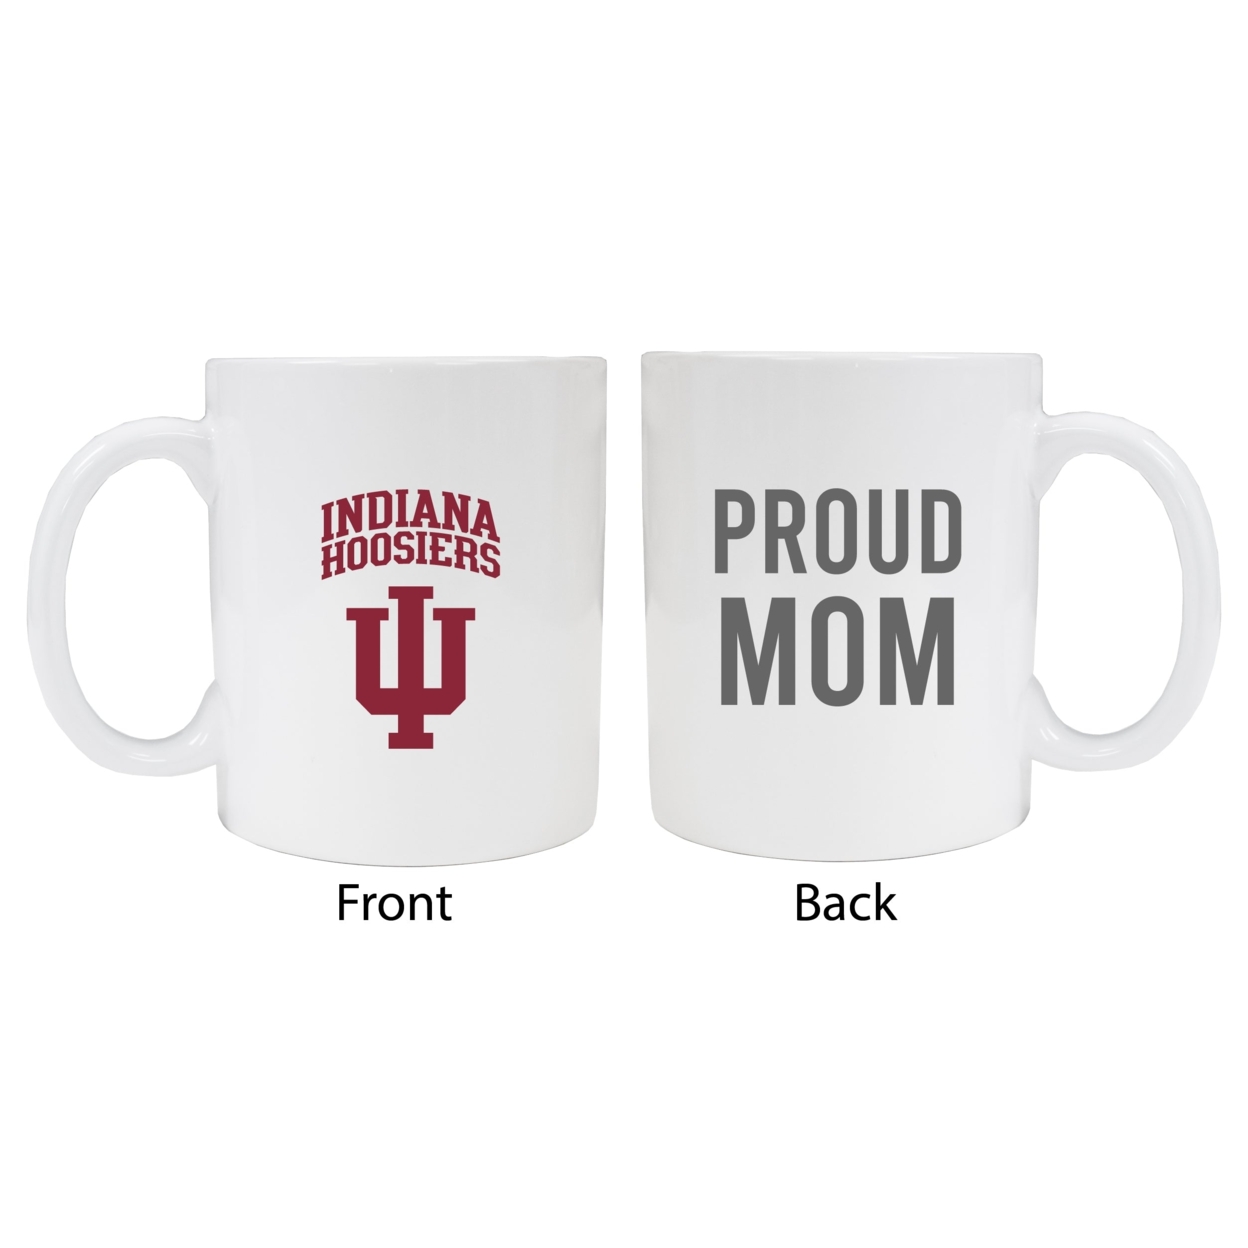 Indiana Hoosiers Proud Mom Ceramic Coffee Mug - White (2 Pack)